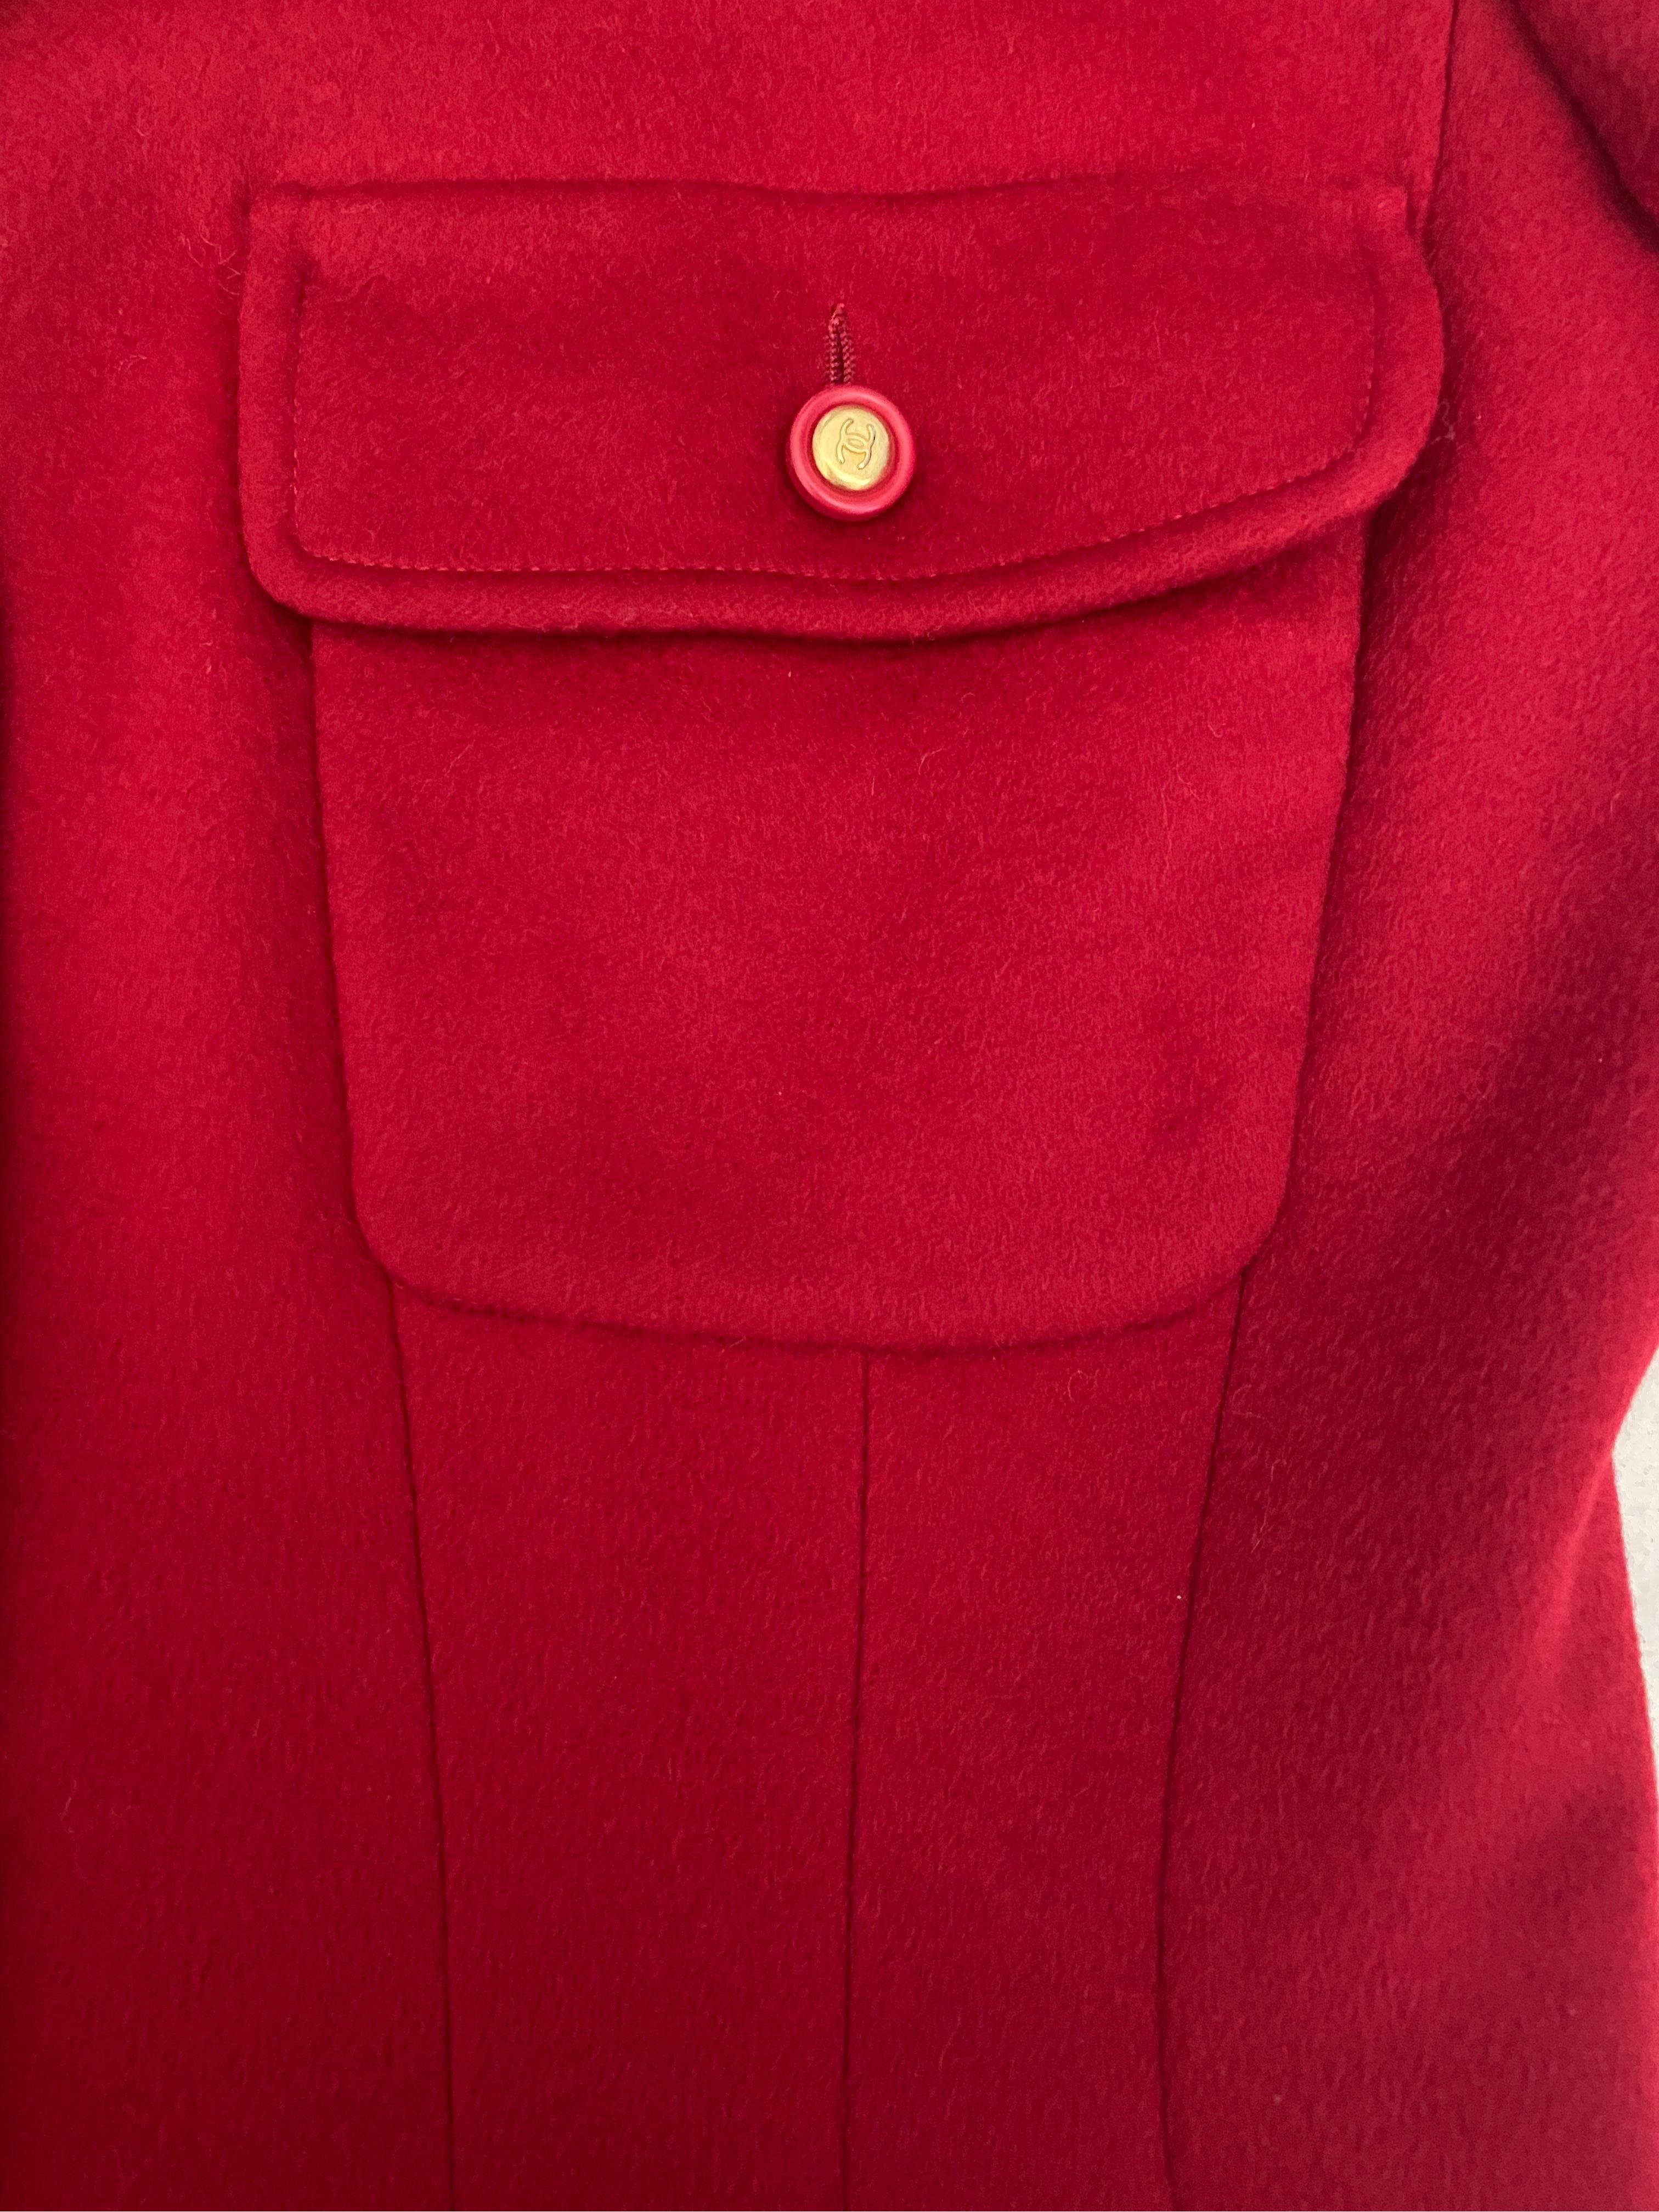 Women's Chanel Red Cashmere Mandarin Chinese Collar Signature Jacket Blazer